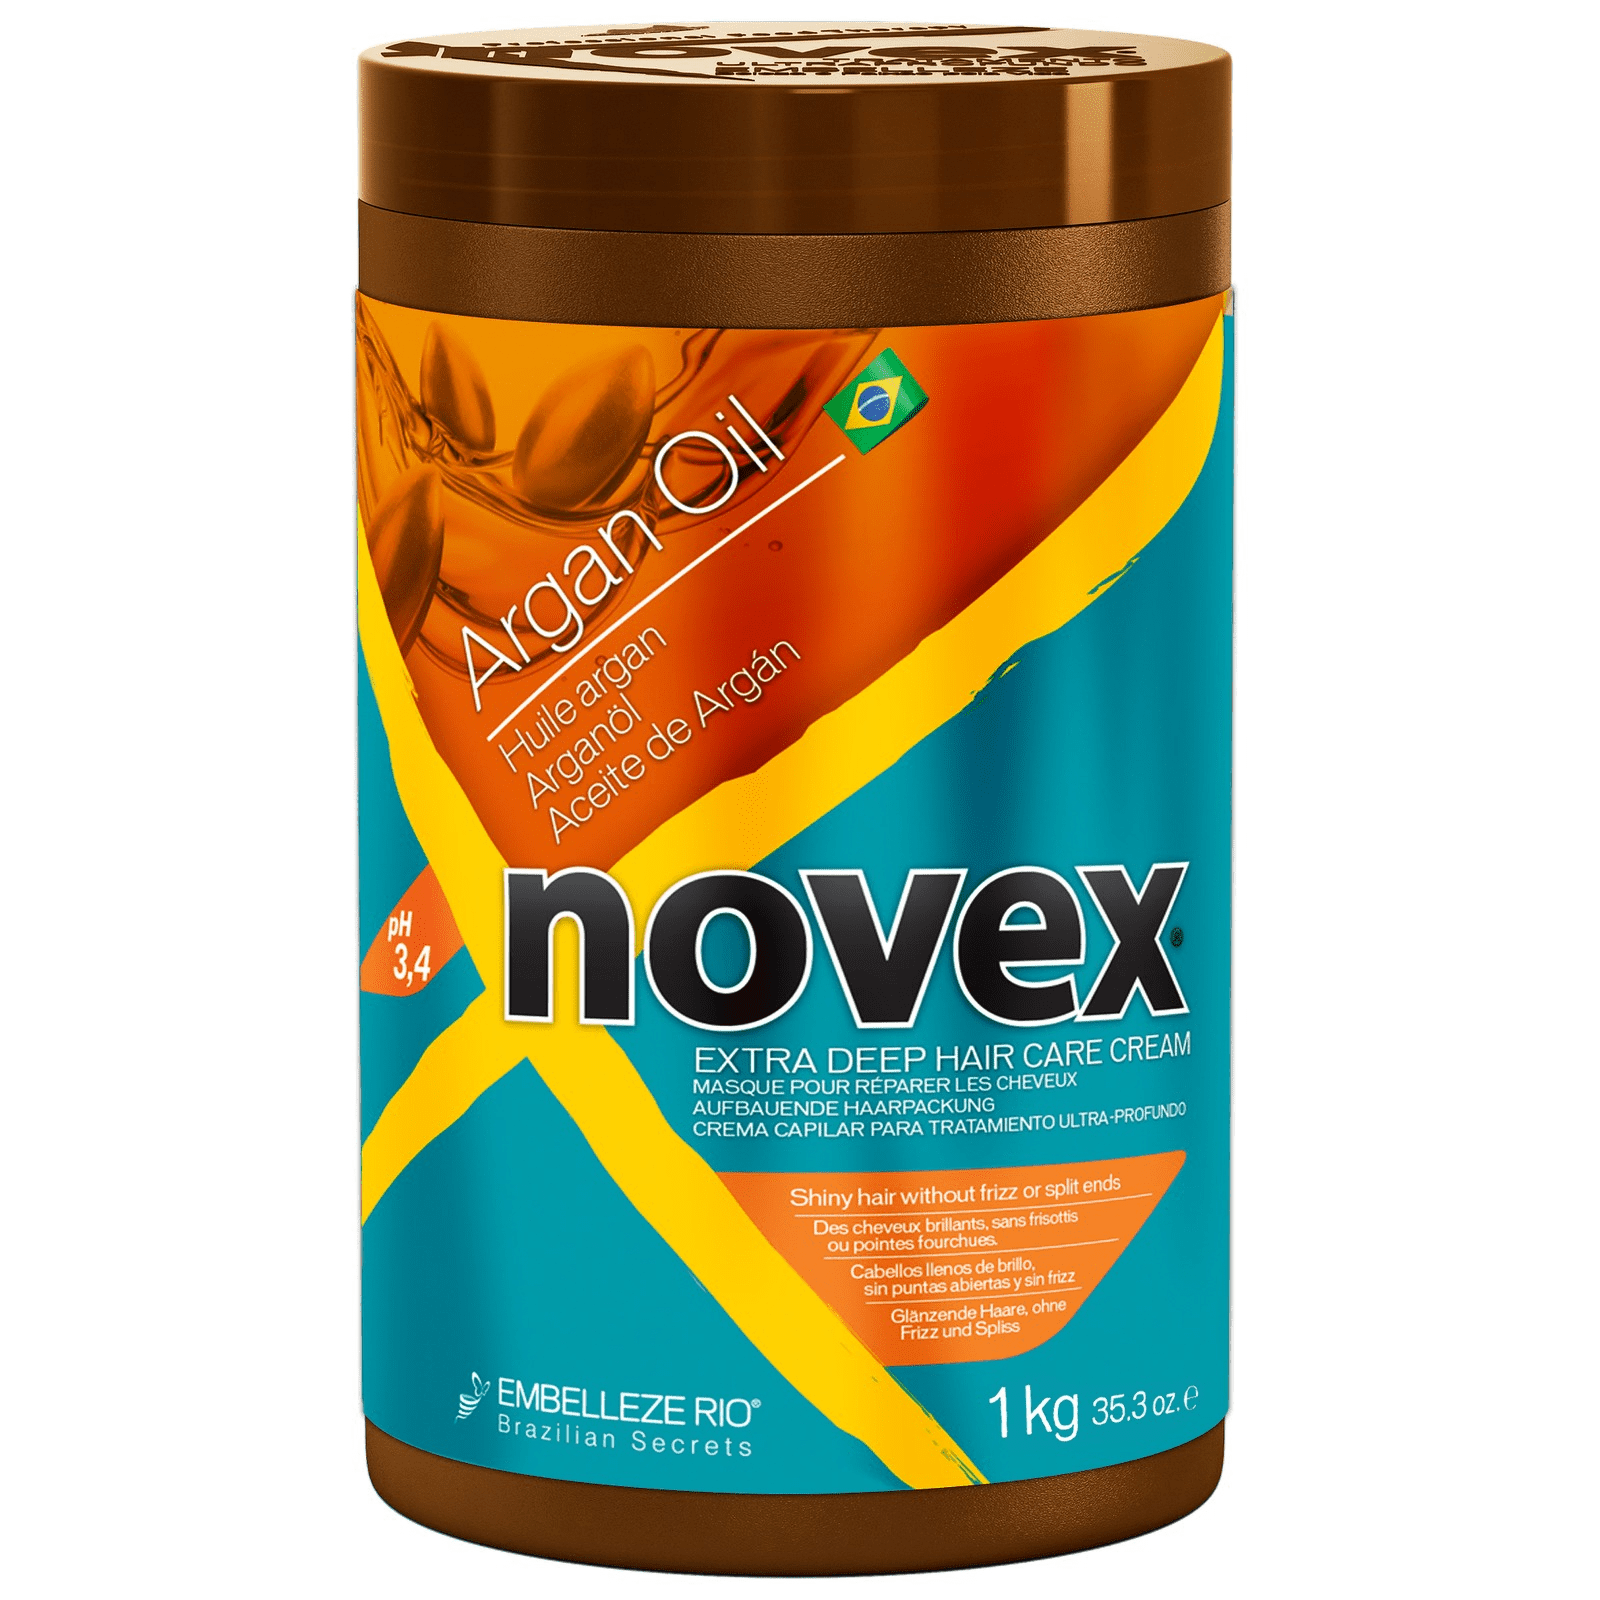 Novex - Argan Oil Deep Conditioning Hair Mask 35.3oz